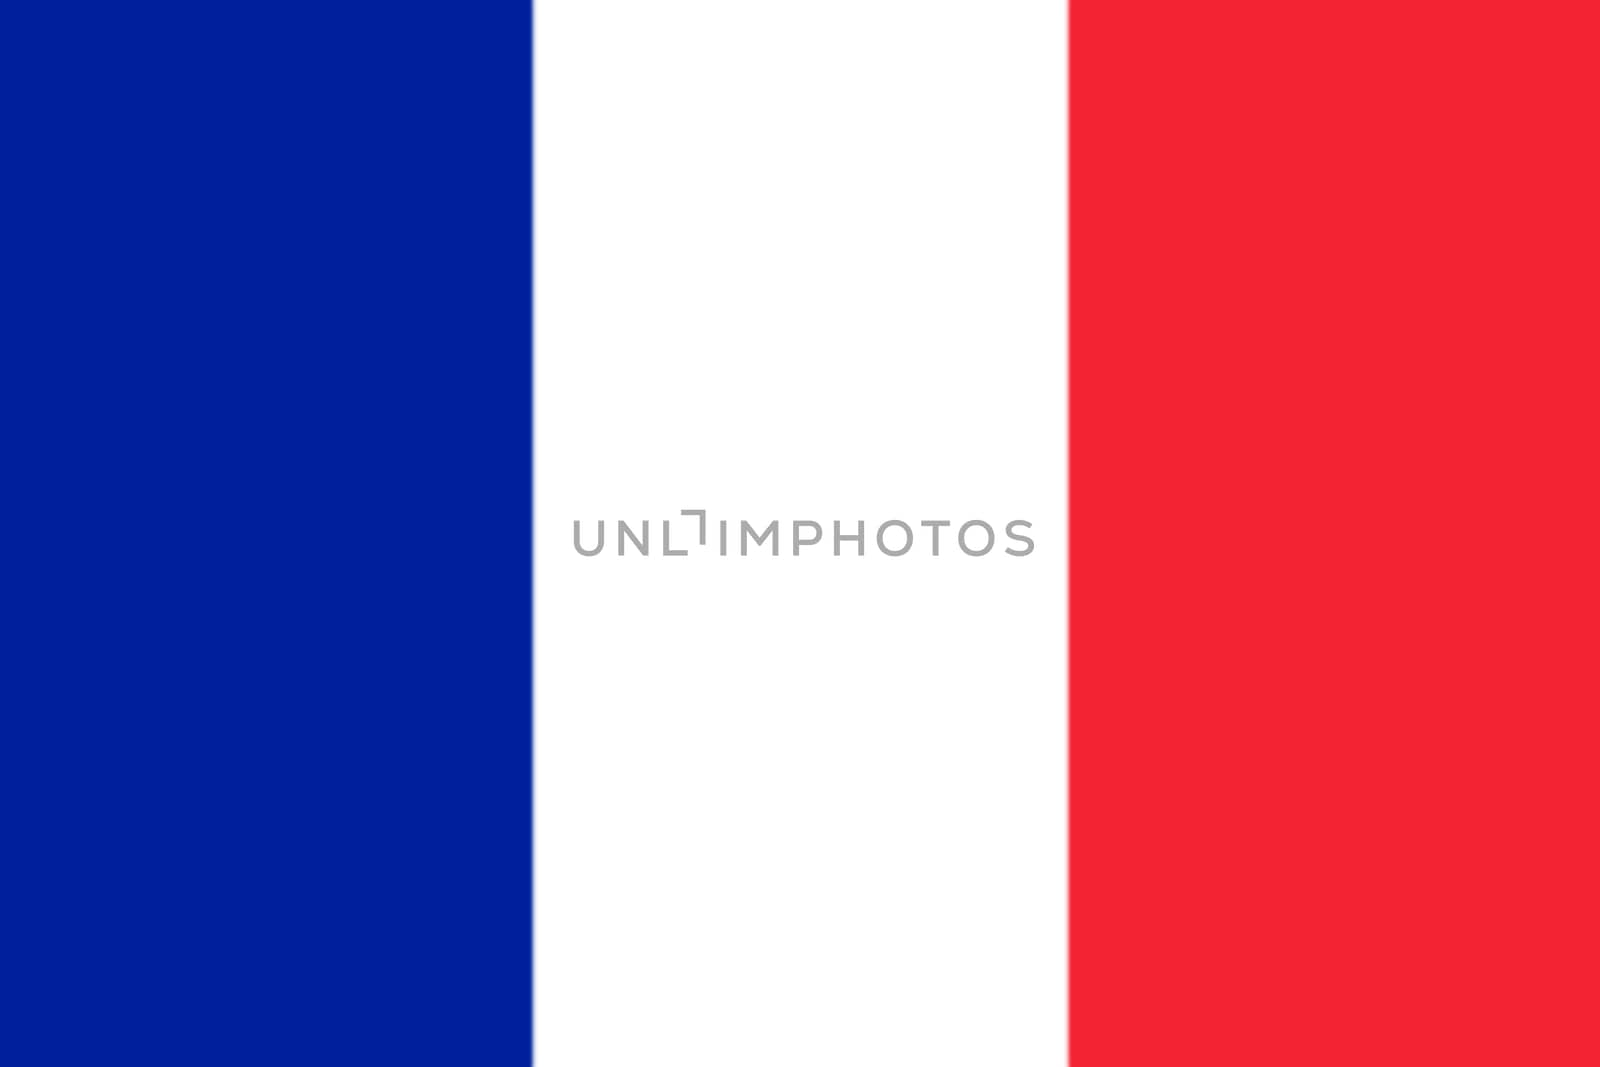 French National Flag 3D illustration 